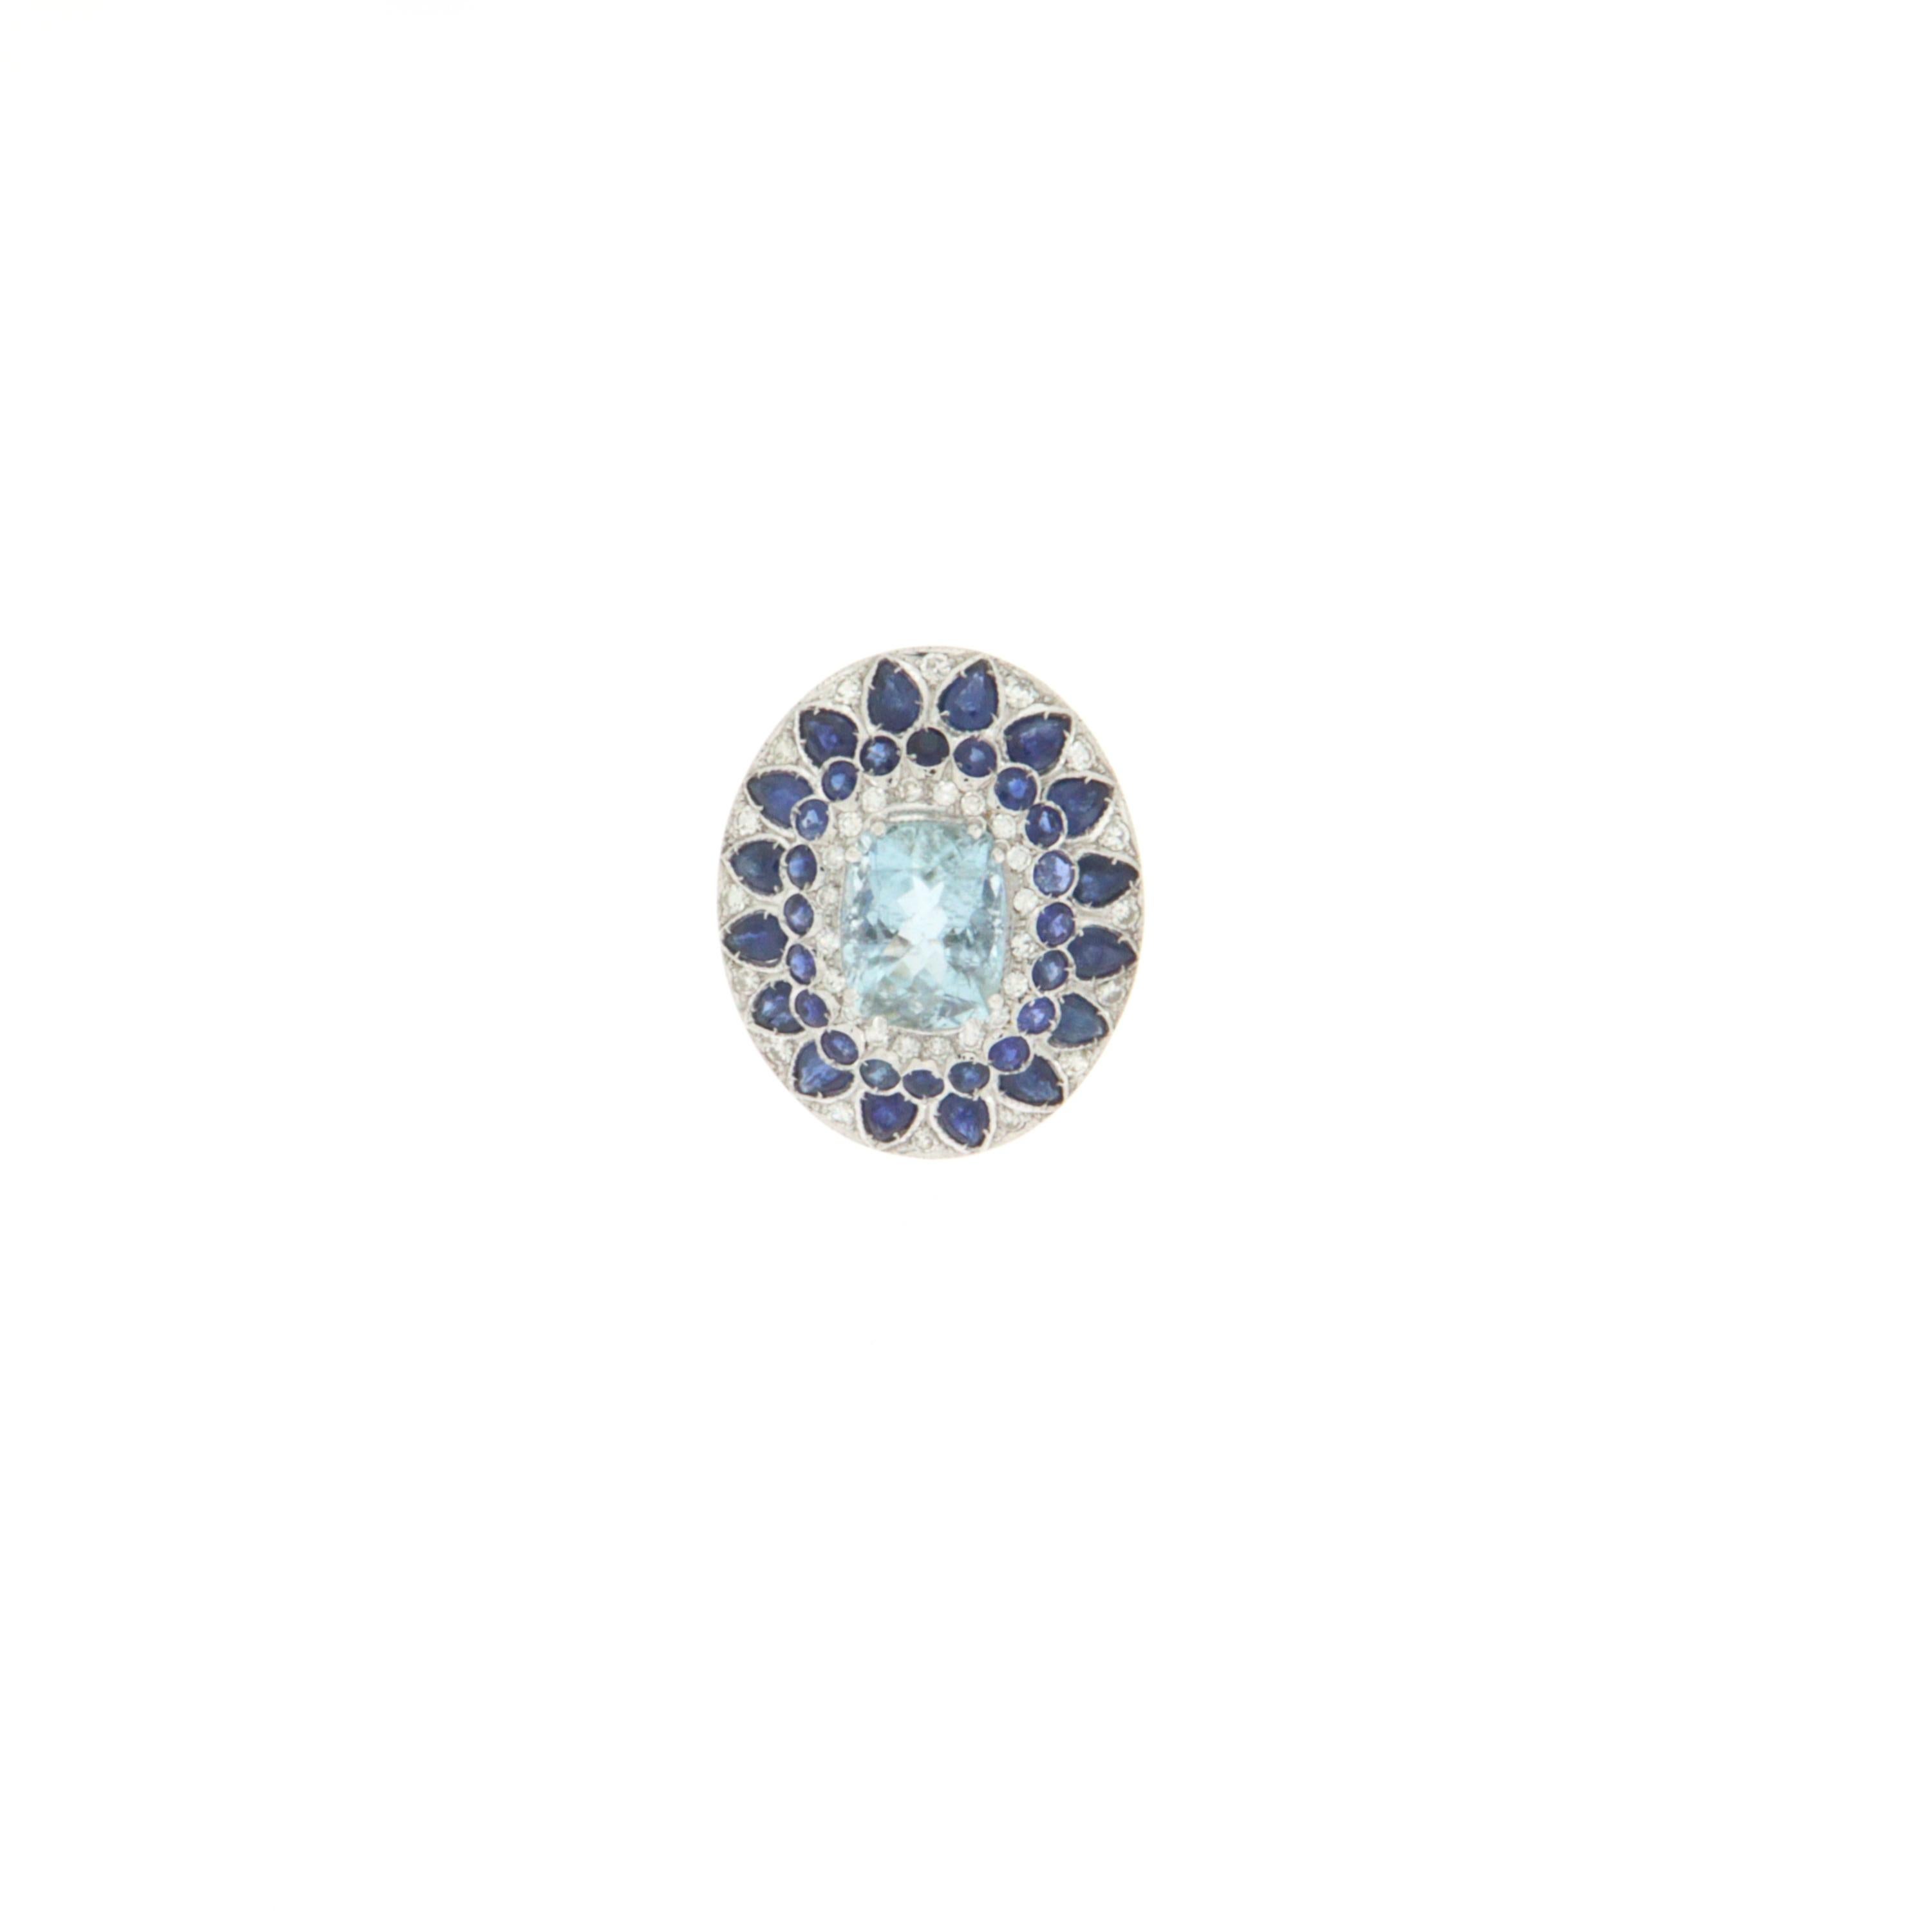  Aquamarine Diamonds Sapphires 18 Karat White Gold Cocktail Ring For Sale 2